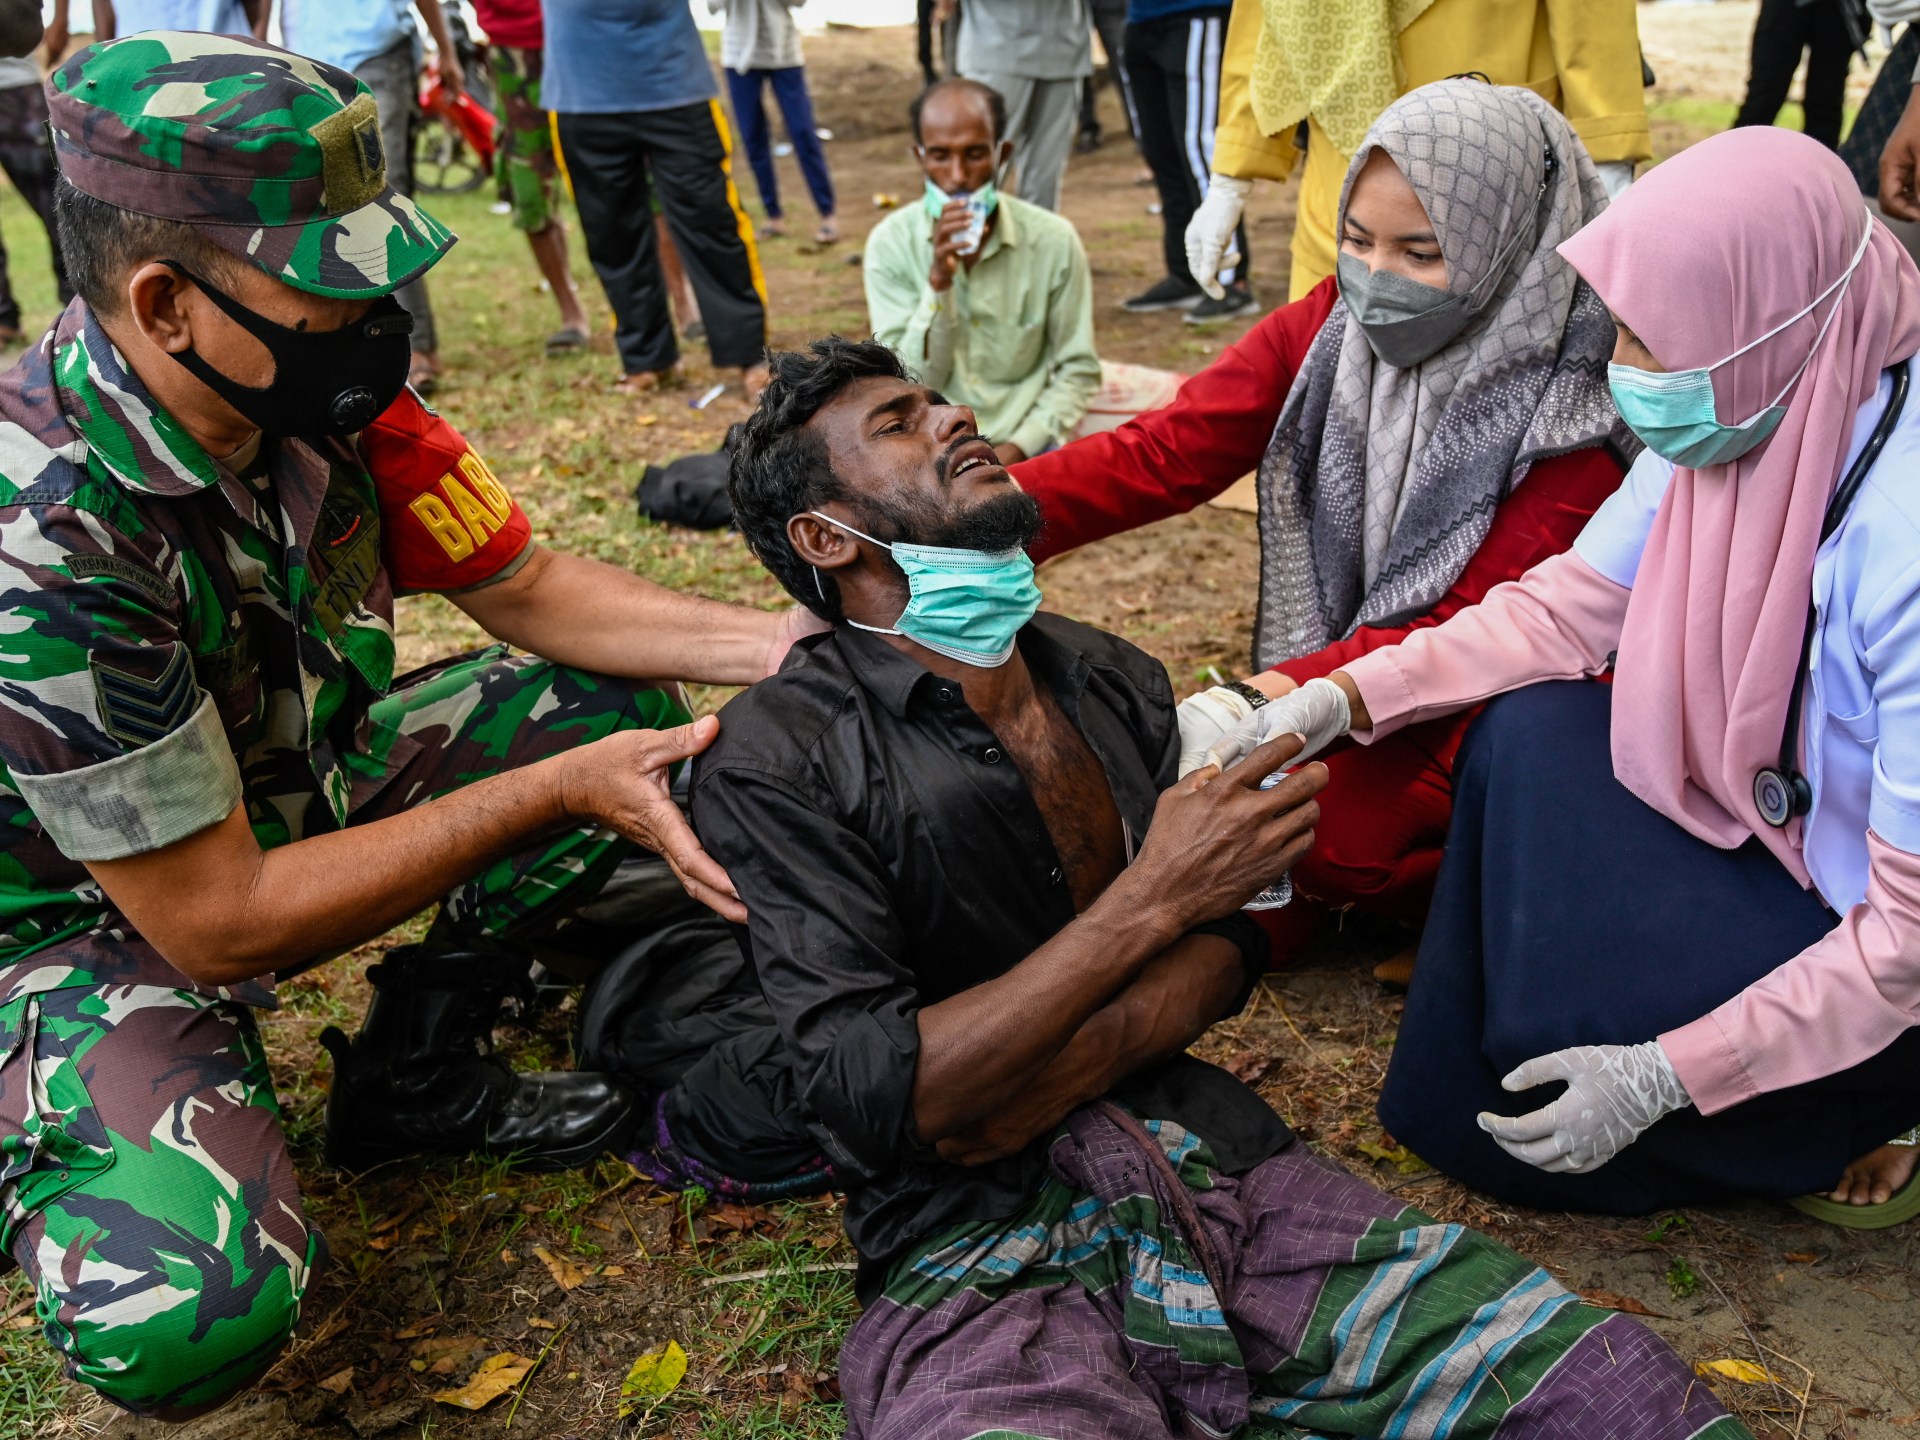 Kapal kedua dengan 185 Rohingya tiba di Aceh, Indonesia  Berita Rohingya